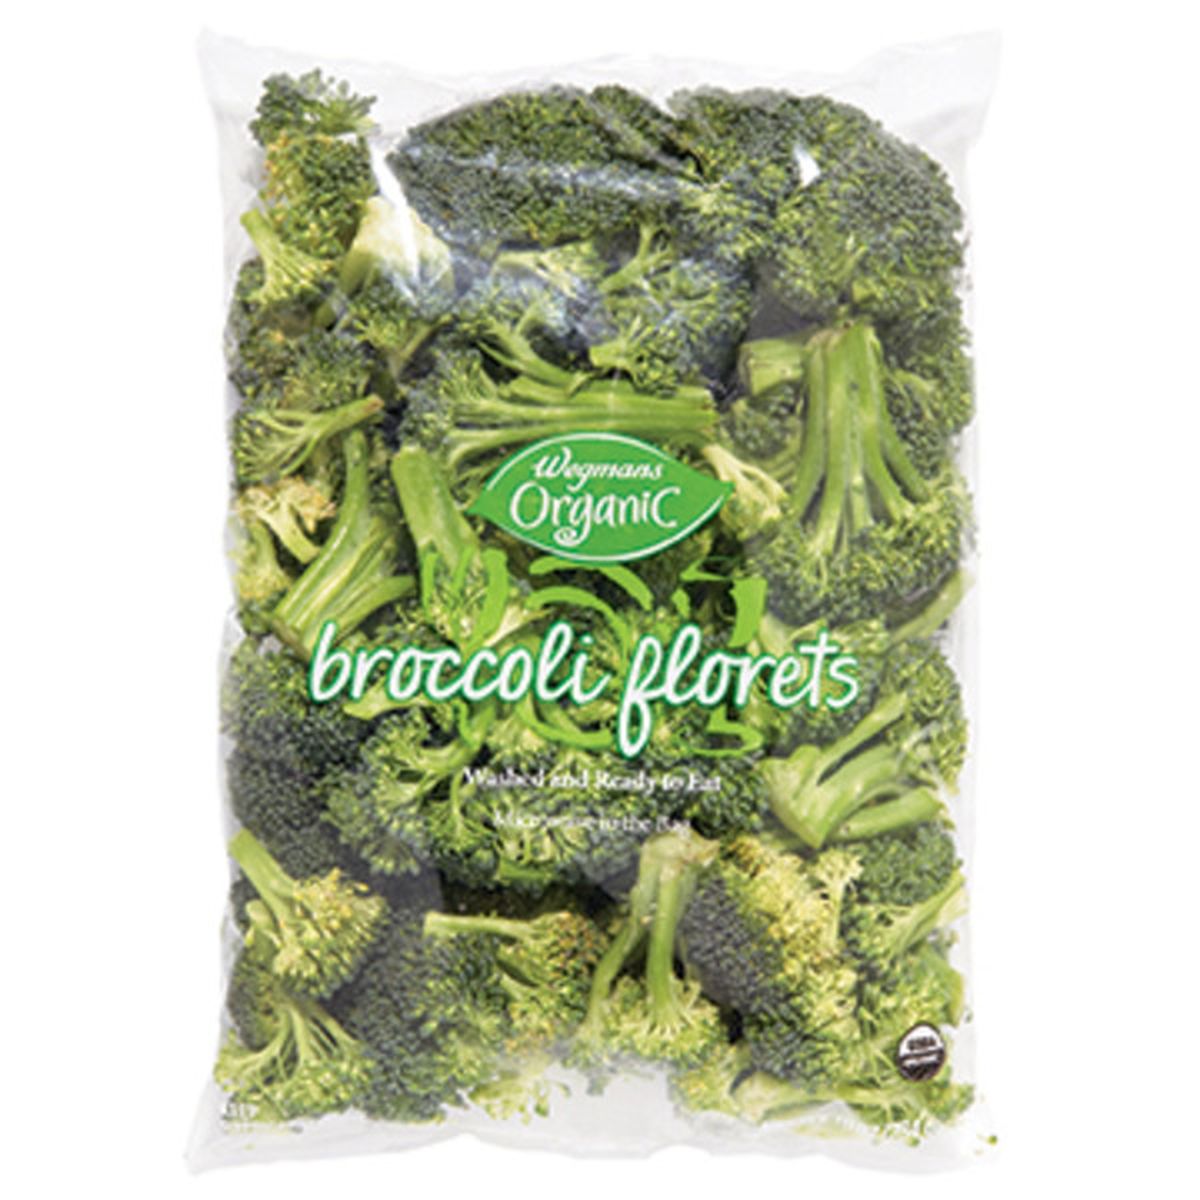 Calories in Wegmans Organic Broccoli Florets